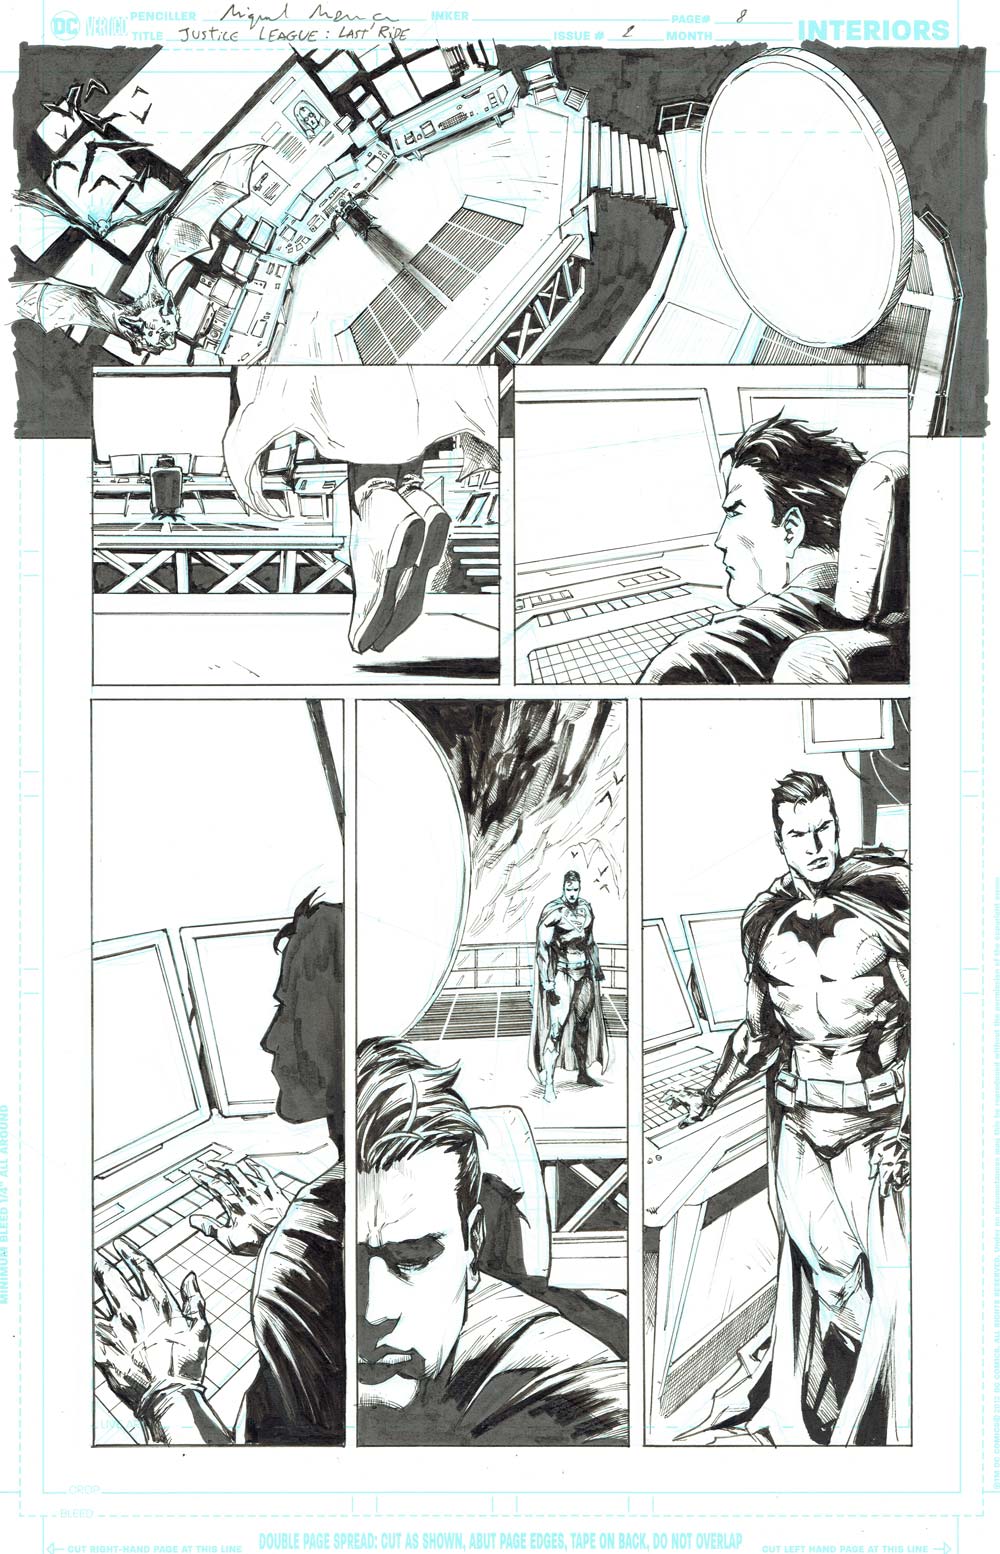 Justice League - Last Ride #2 (Page 8)